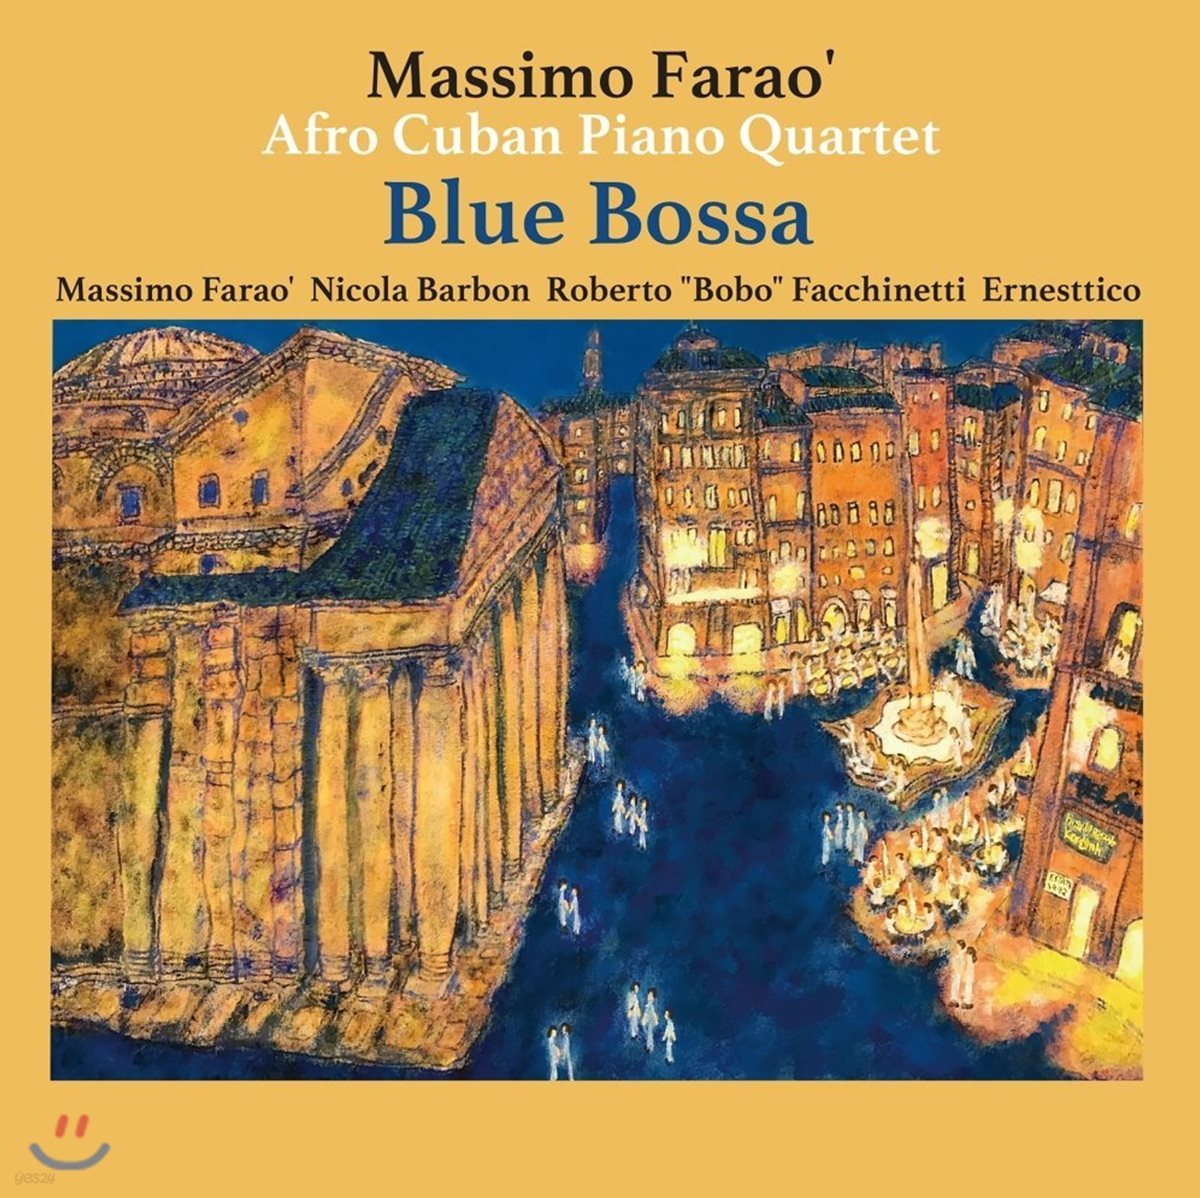 Massimo Farao / Afro Cuban Piano Quartet - Blue Bossa